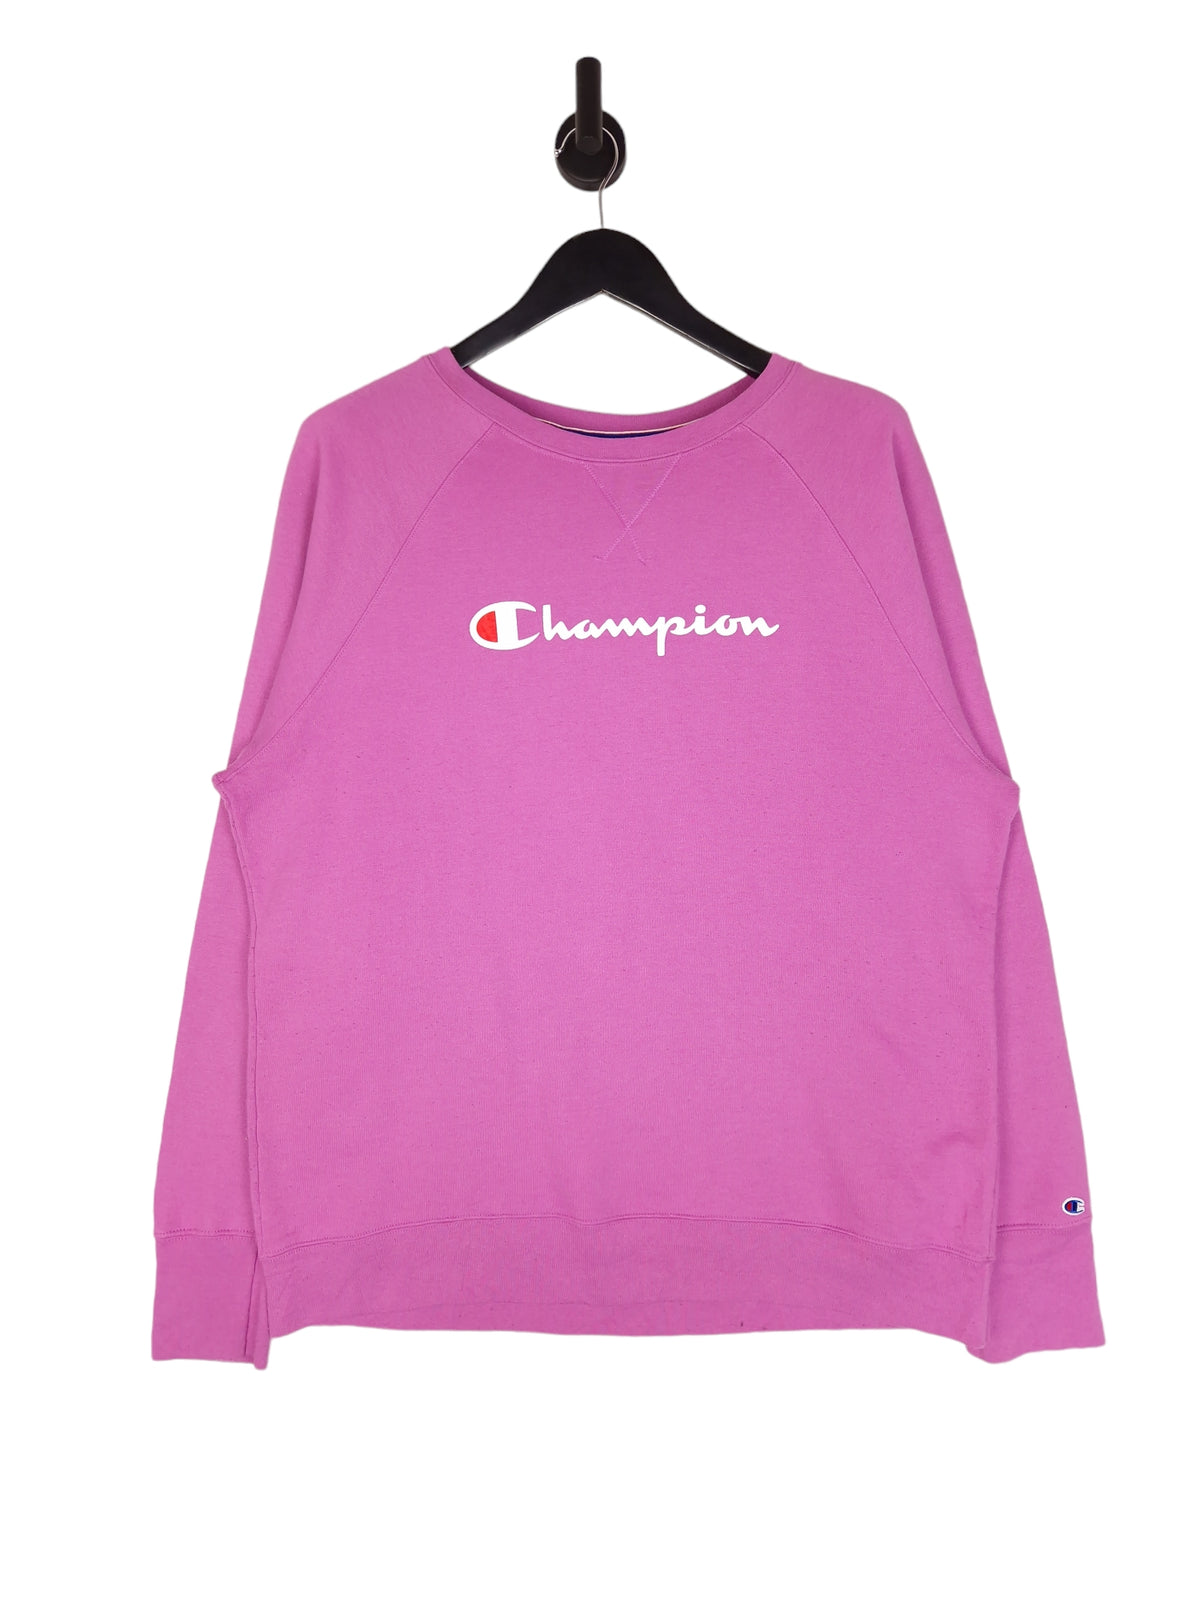 Champion Spell Out Sweatshirt - Size XXL